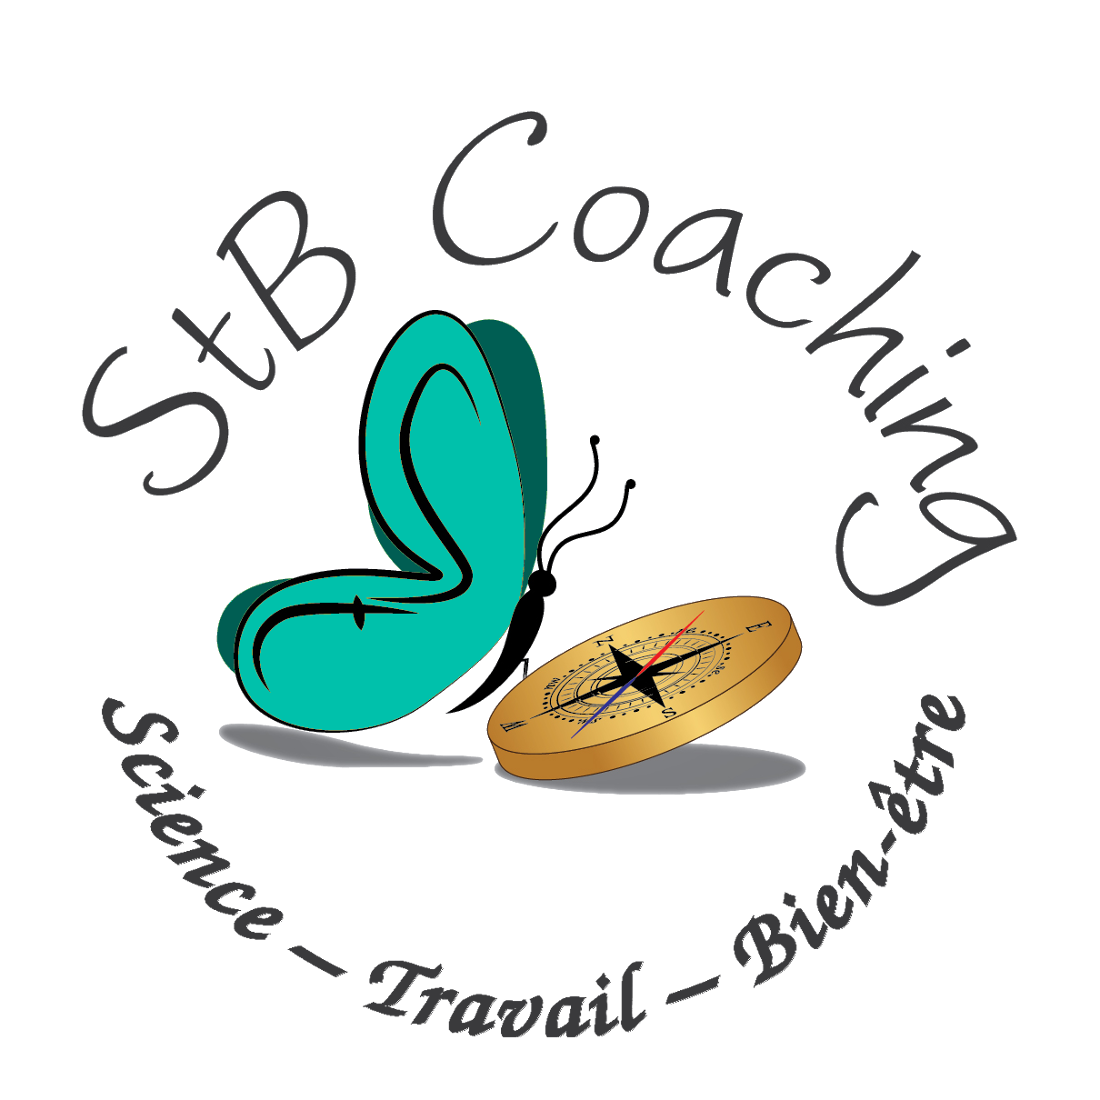 StB Coaching